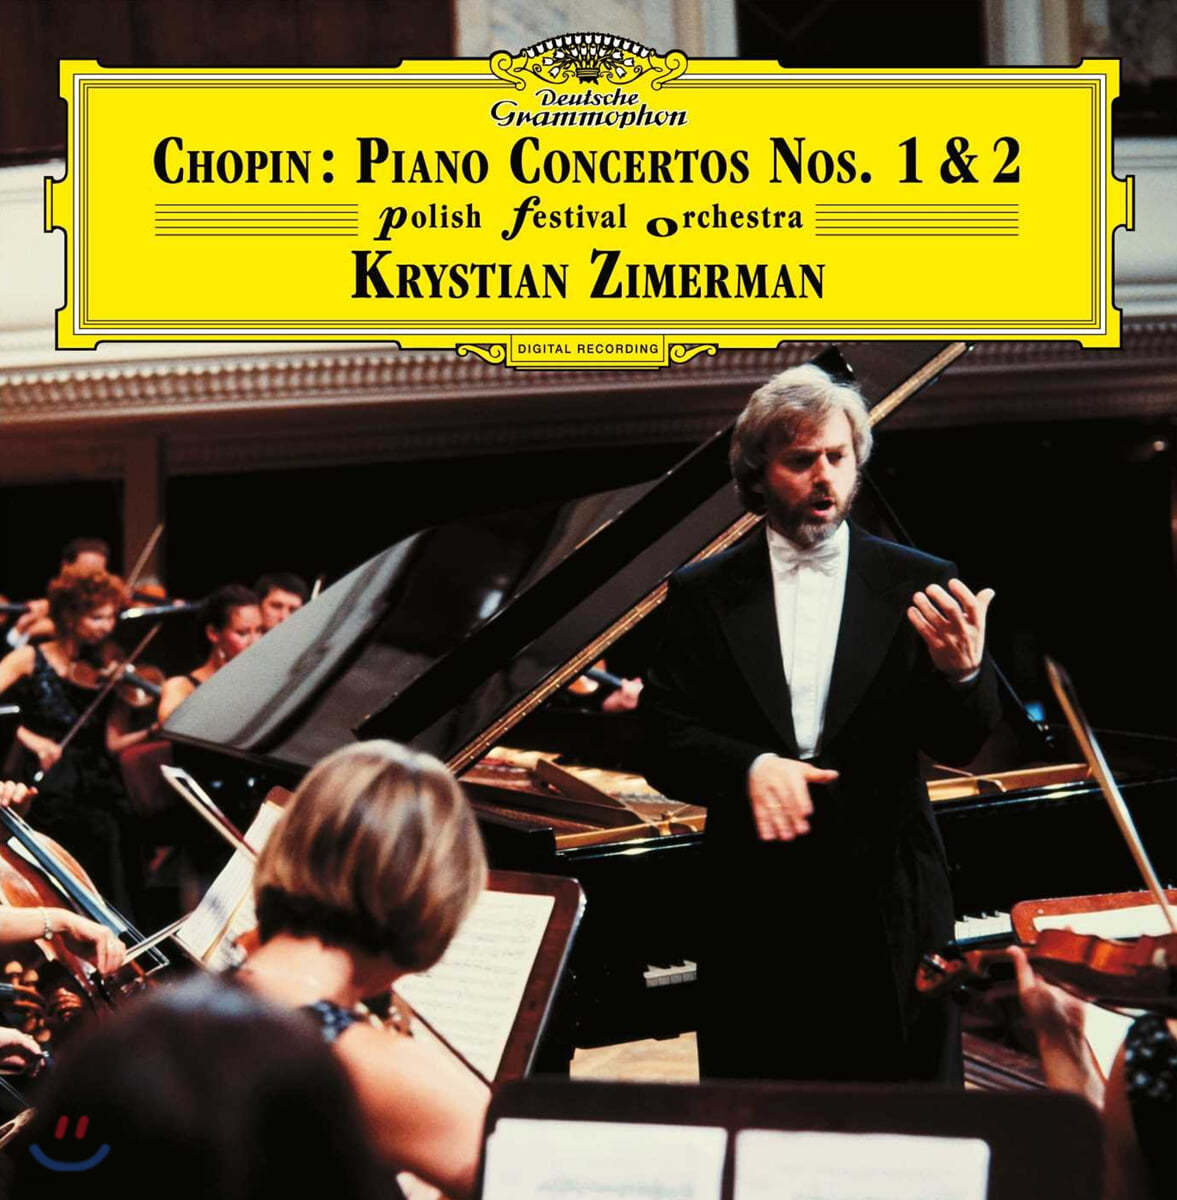 Krystian Zimerman 쇼팽: 피아노 협주곡 1, 2번 - 크리스티안 지메르만 [2LP]